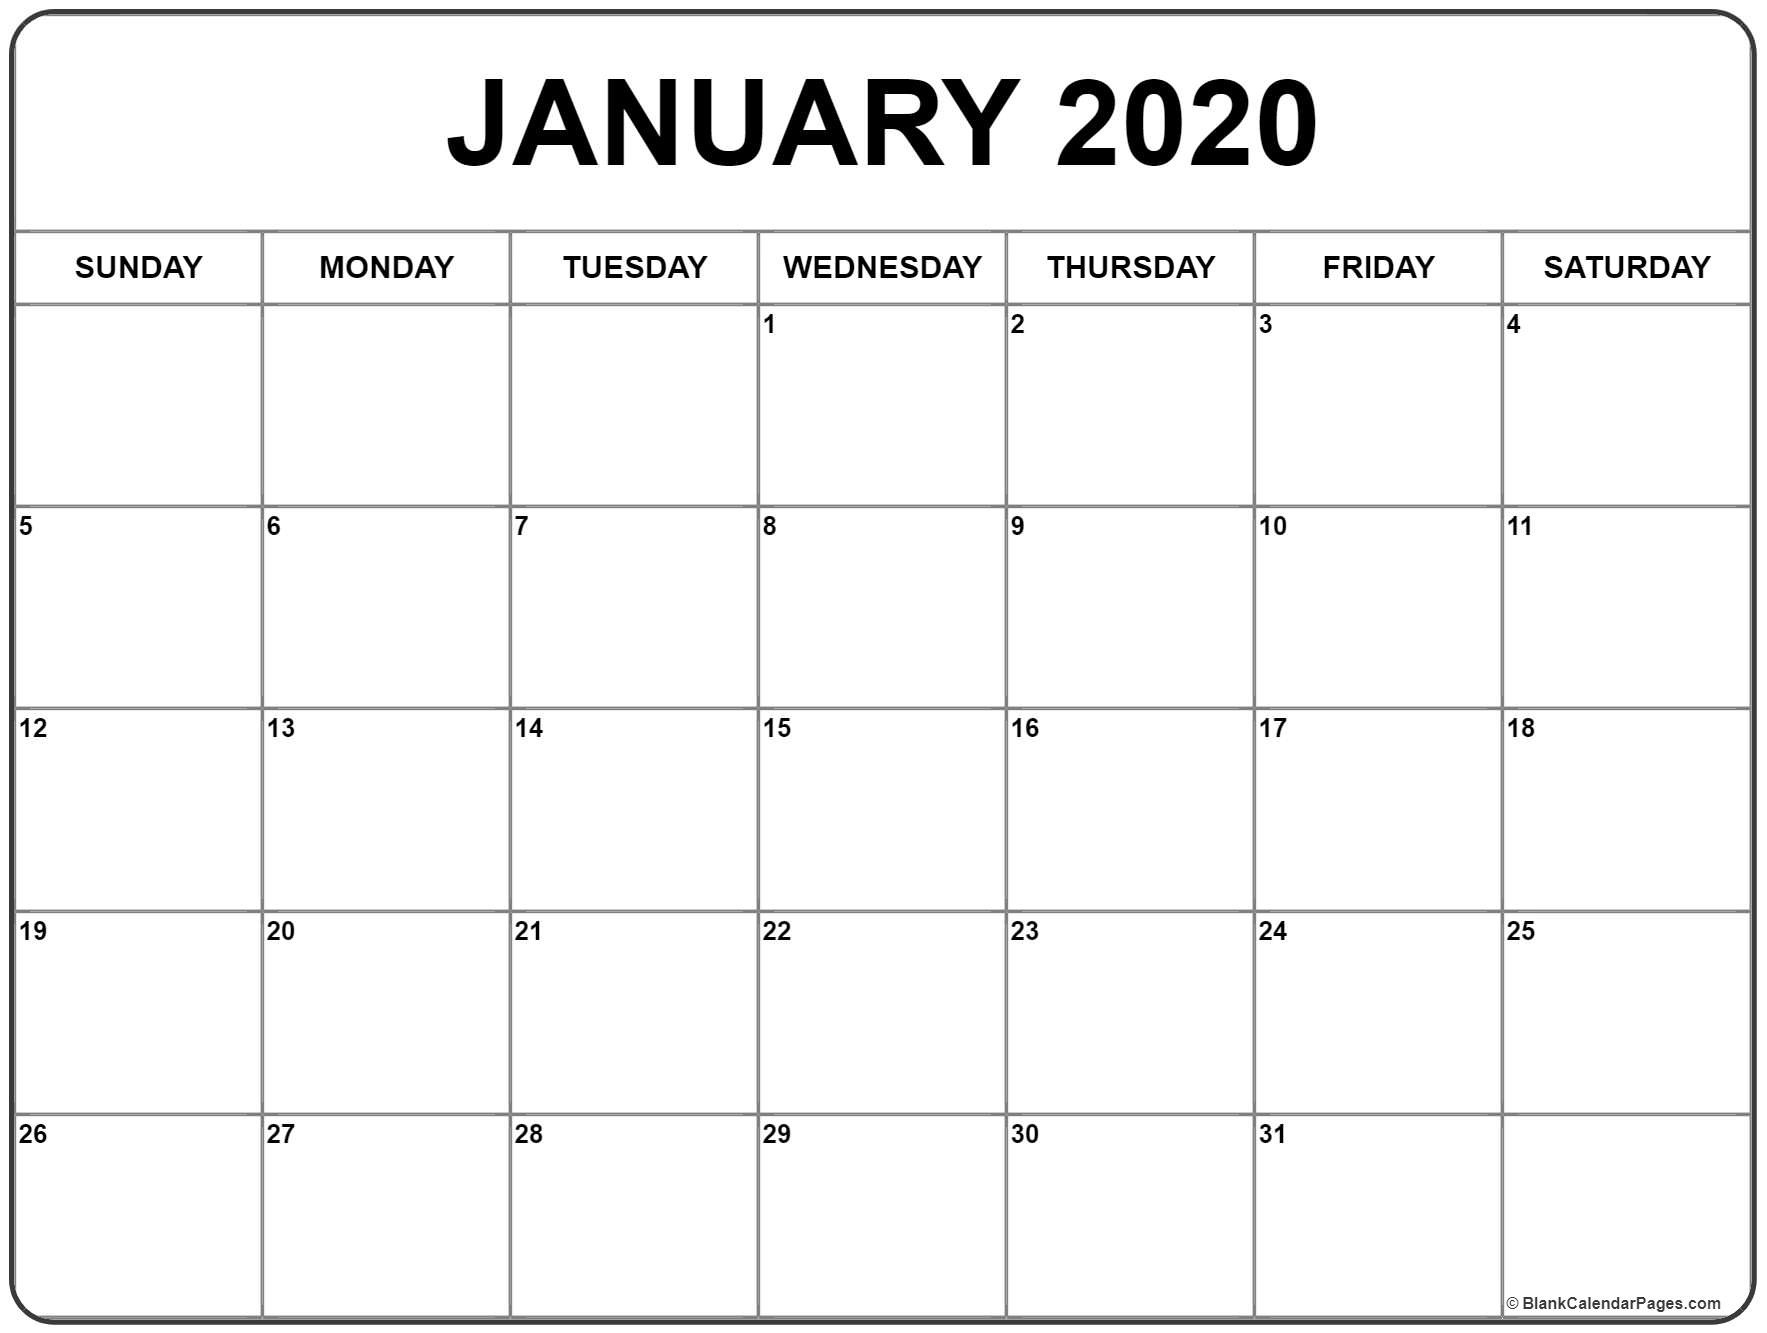 January 2020 Calendar | Free Printable Monthly Calendars-Blank Monthly Calendar Printable 2020 Bills Schedule